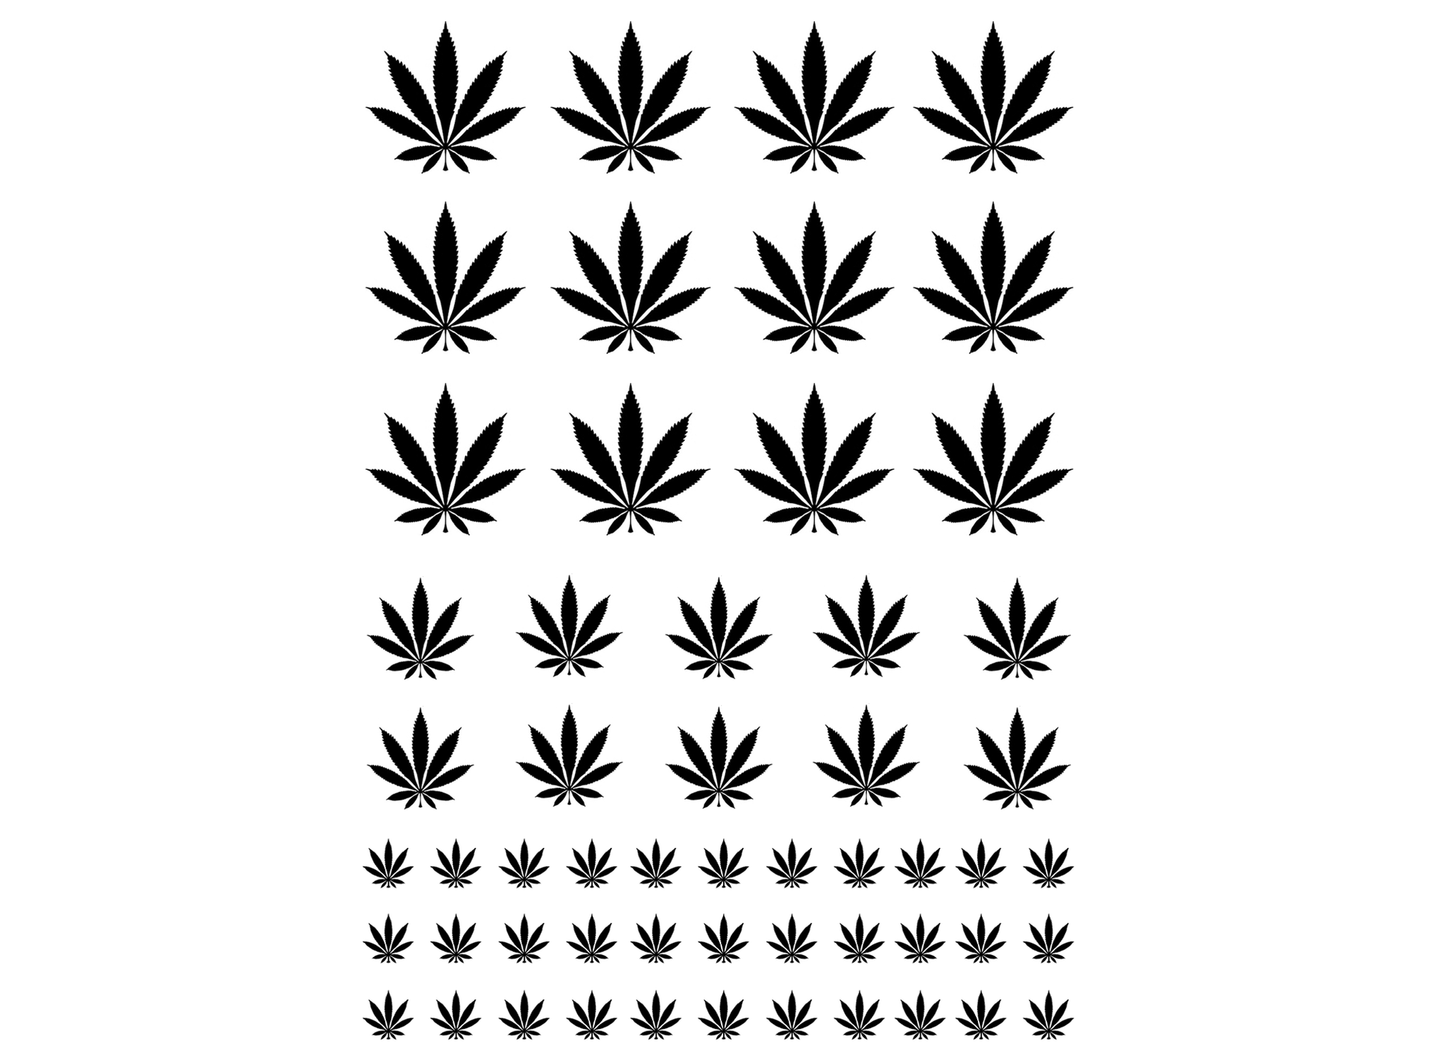 Marijuana Leaf 55 pcs 1/4" to 3/4" Black Fused Glass Decals